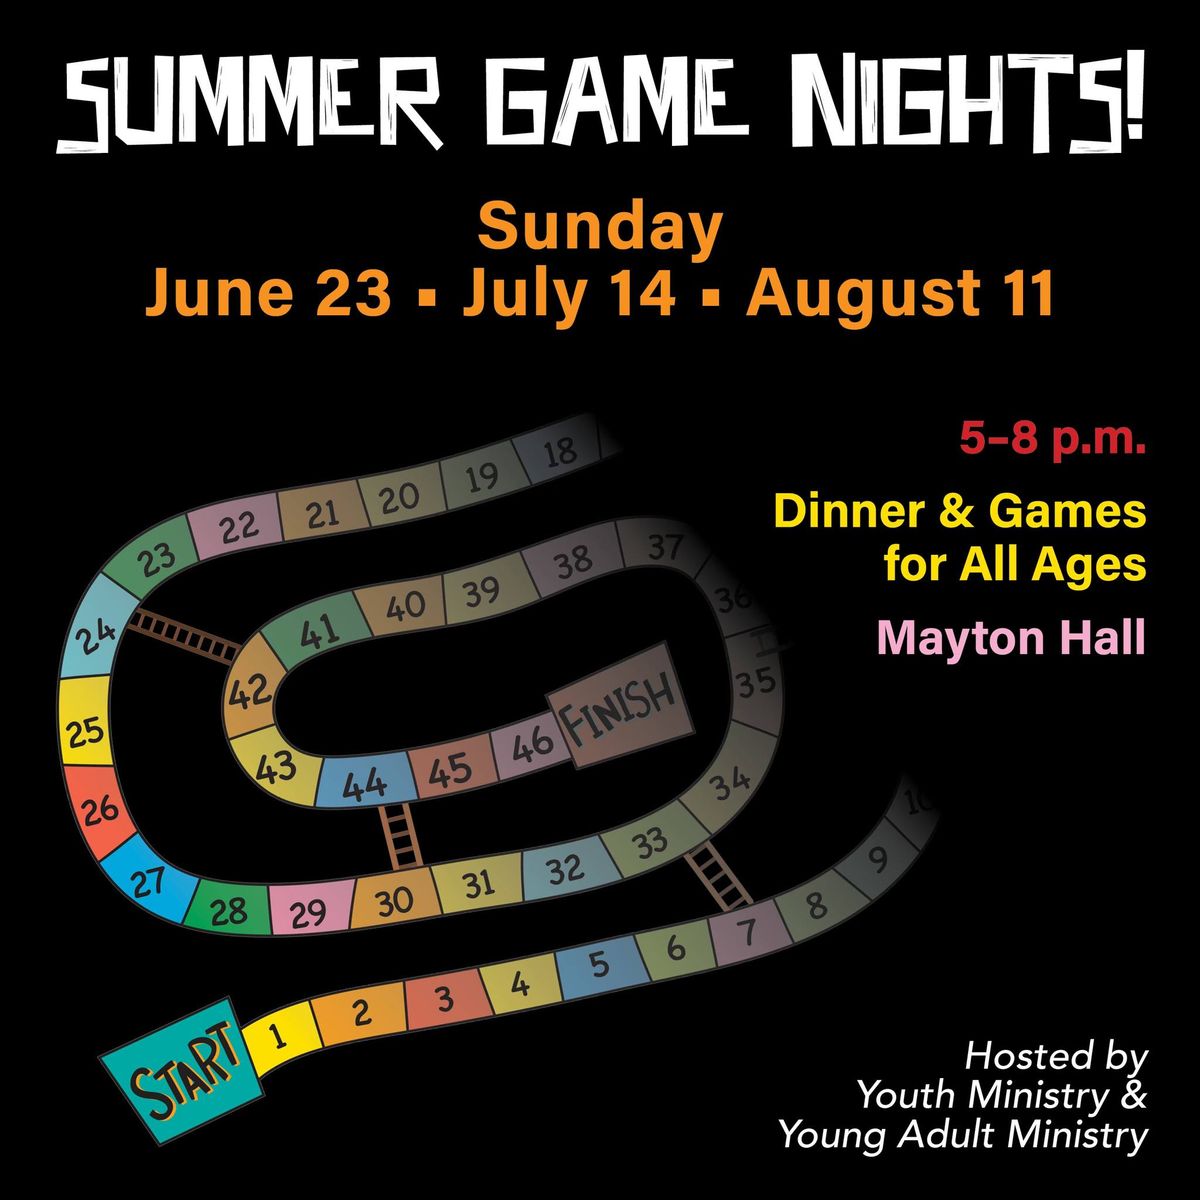 Summer Game Night!